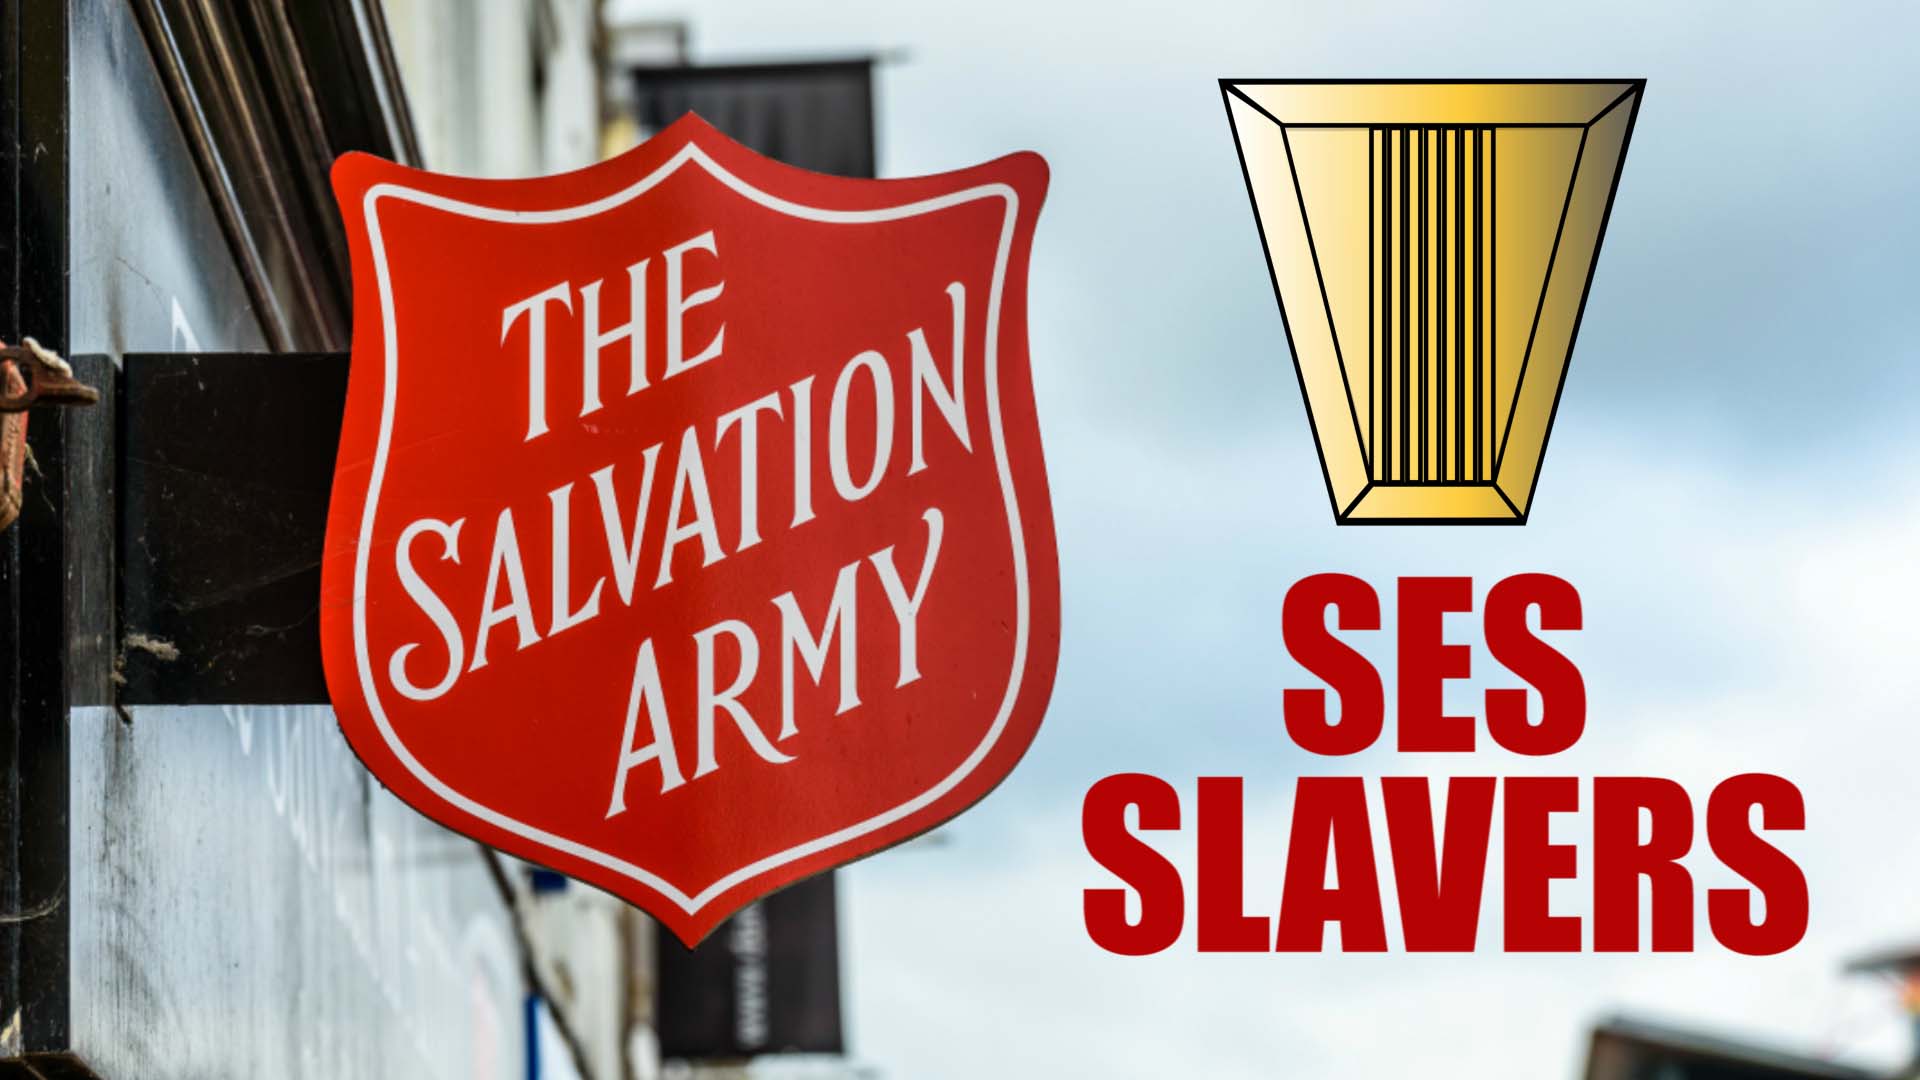 Salvation Army - Senior Executive Services (SES) slavers